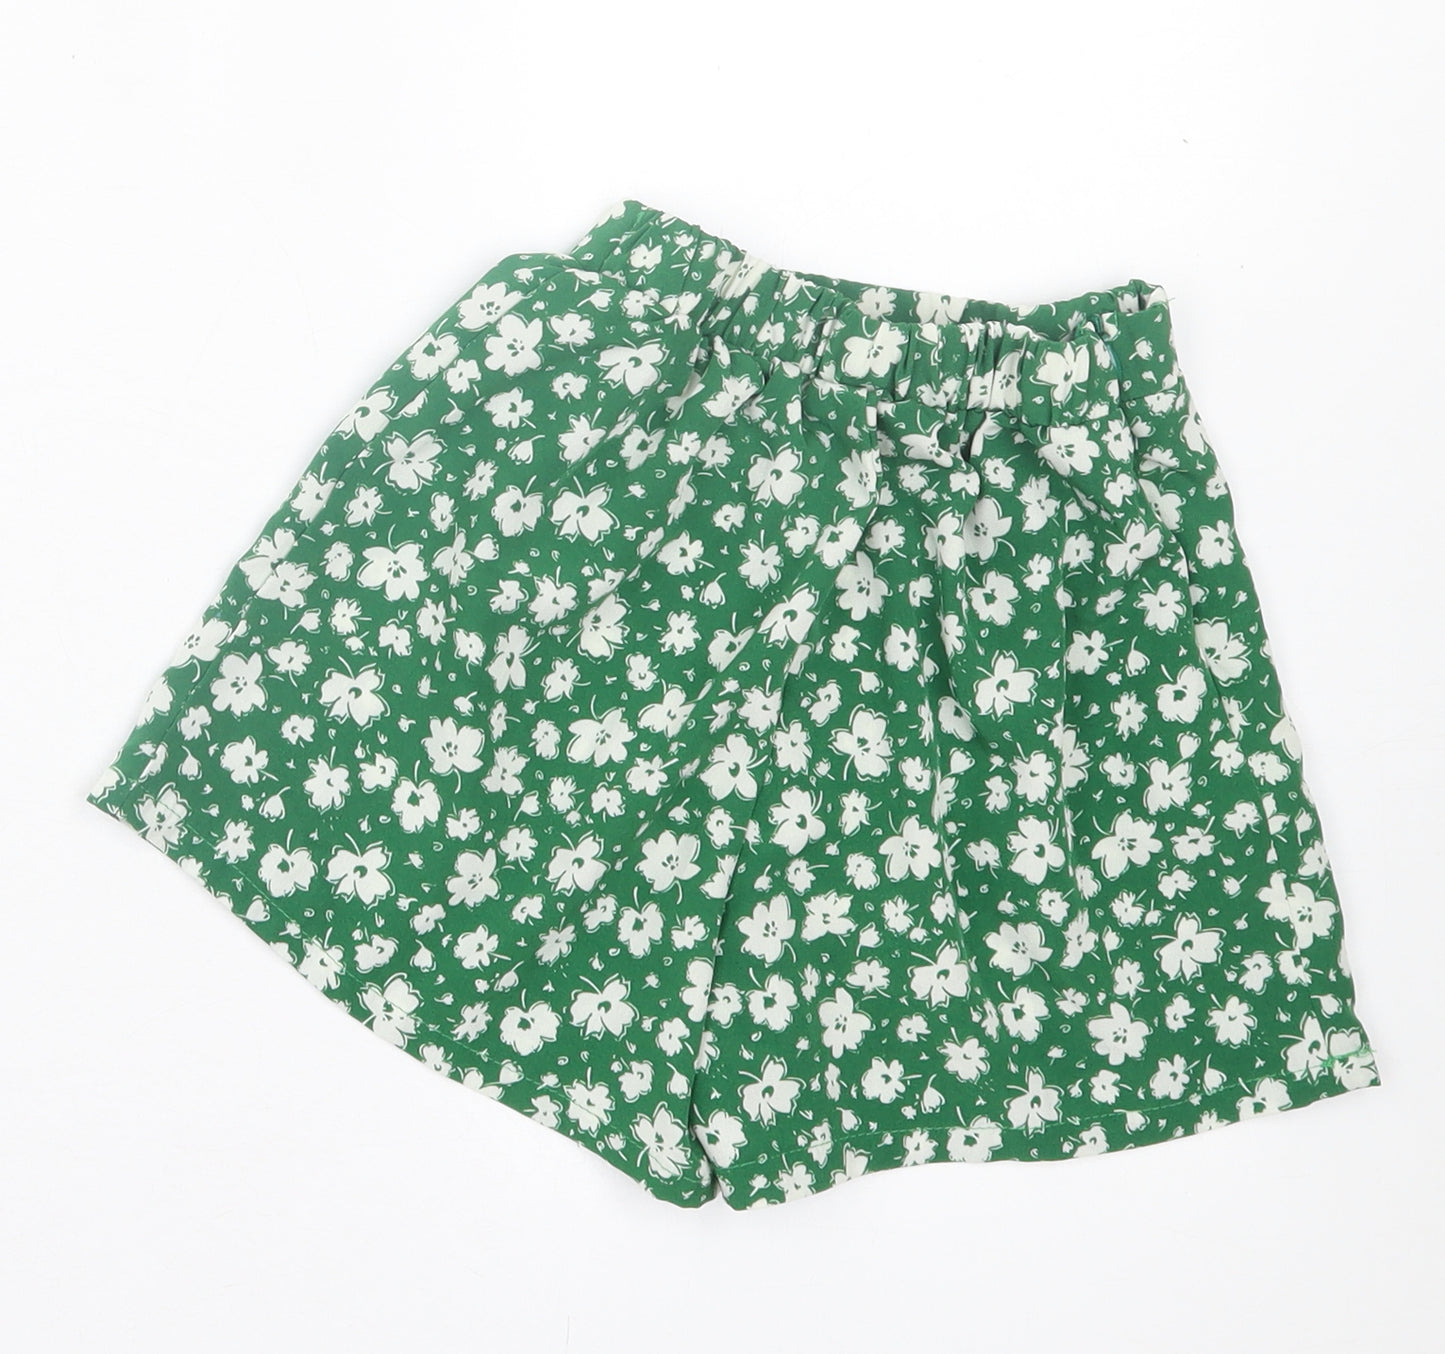 SheIn Girls Green Floral Polyester Paperbag Shorts Size 8 Years Regular